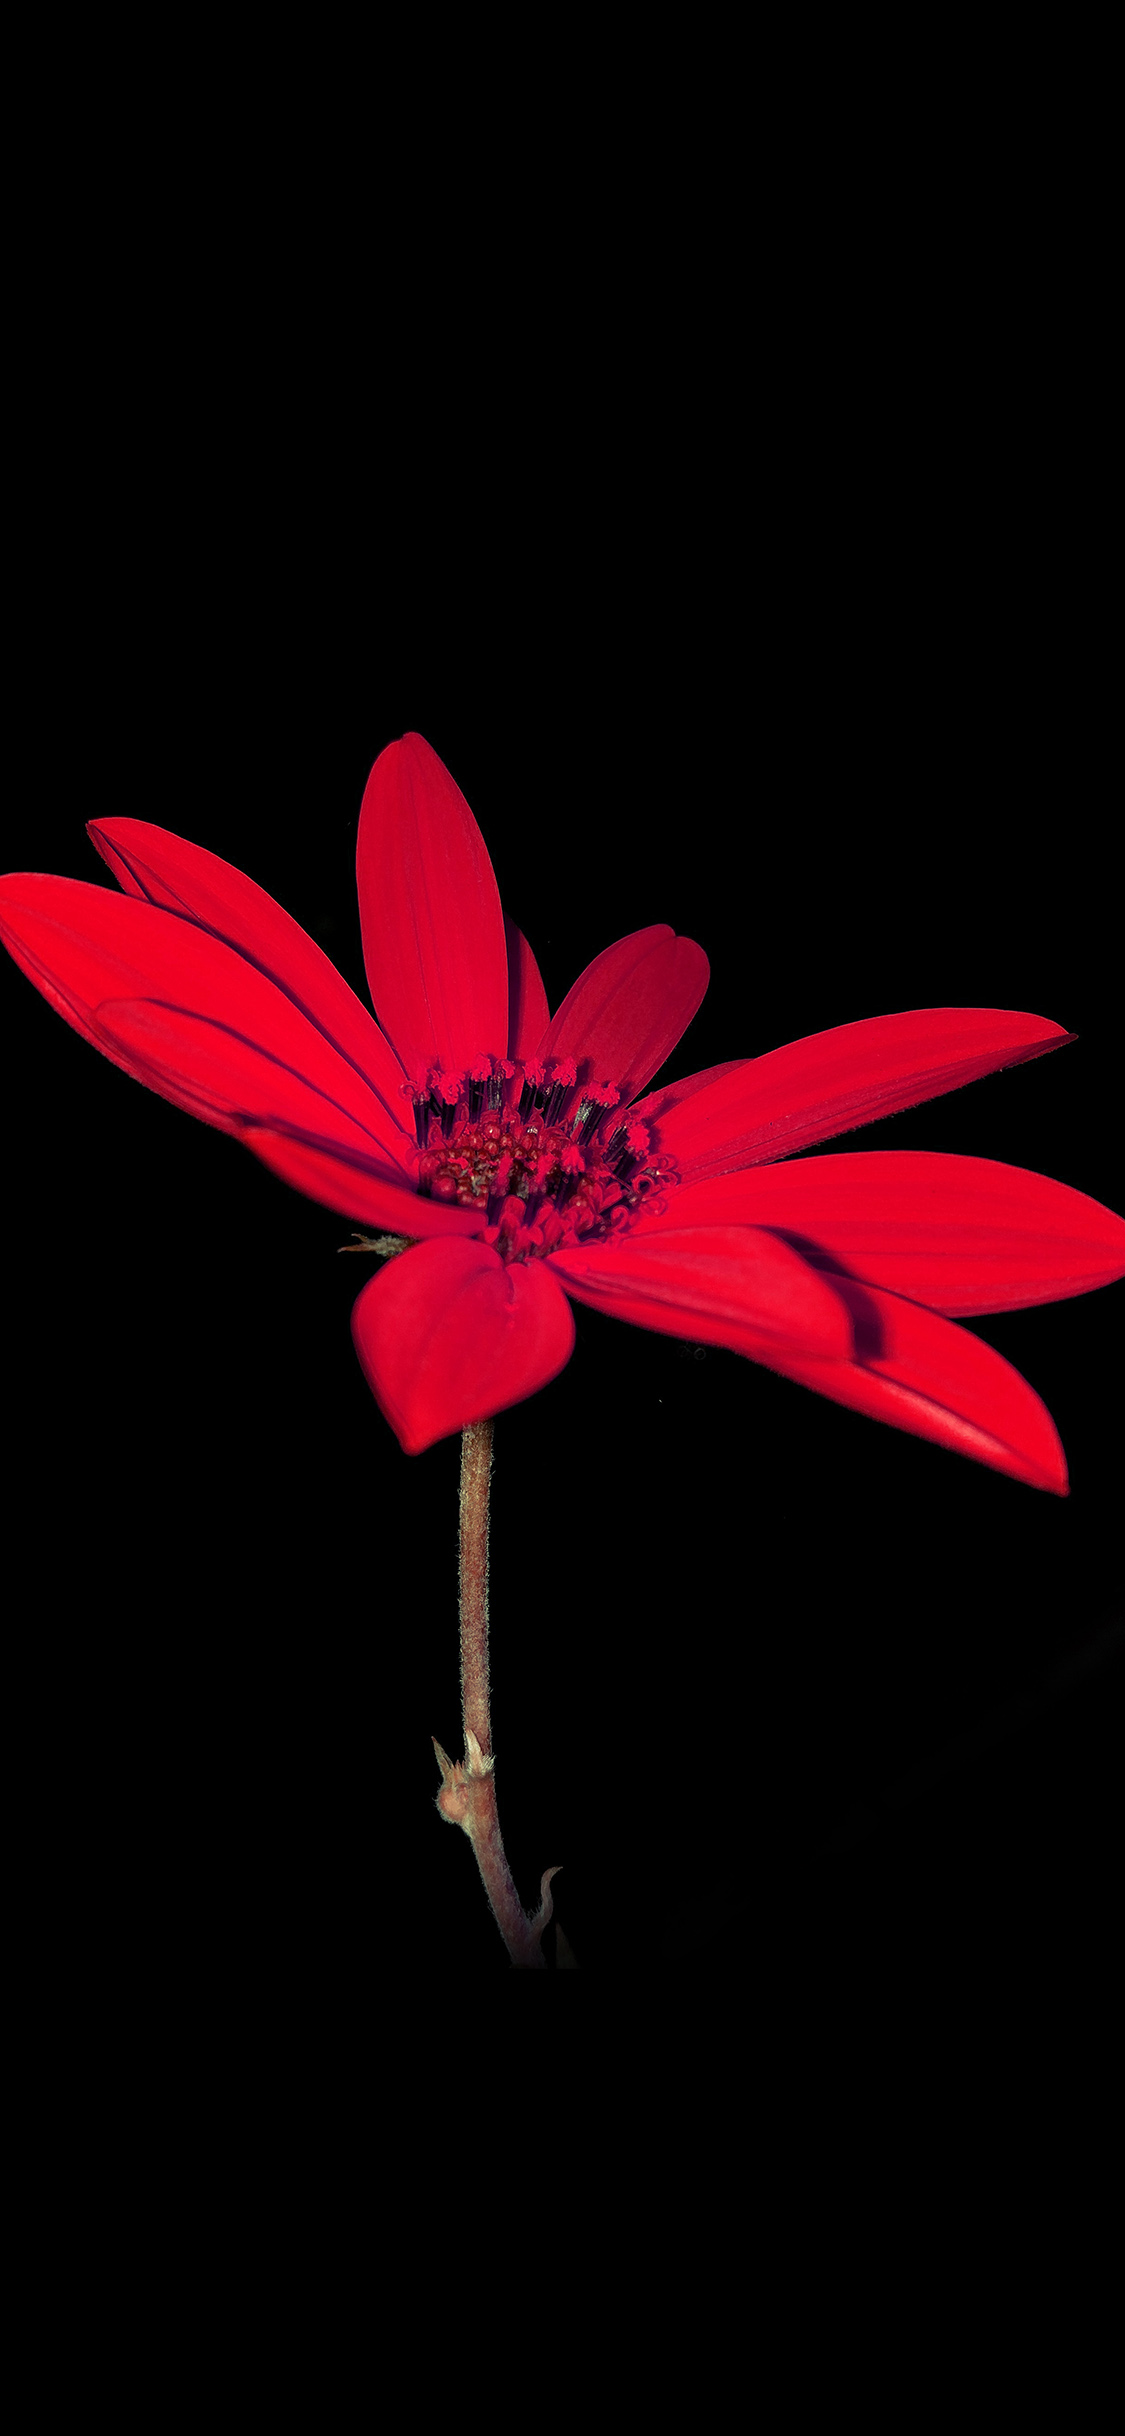 iPhone X wallpaper. flower red nature art dark minimal simple